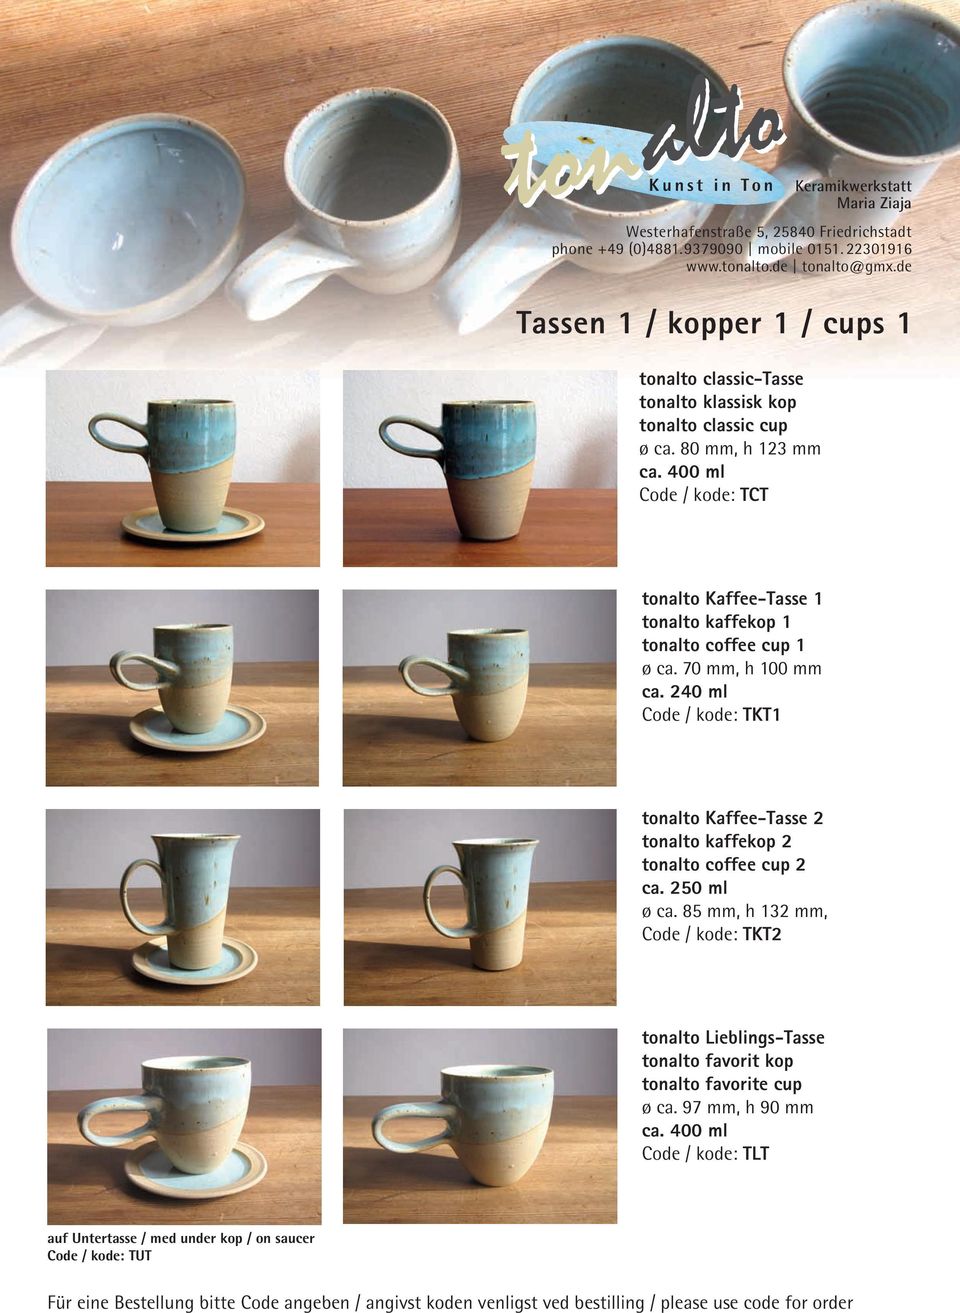 240 ml Code / kode: TKT1 tonalto Kaffee-Tasse 2 tonalto kaffekop 2 tonalto coffee cup 2 ca. 250 ml ø ca.